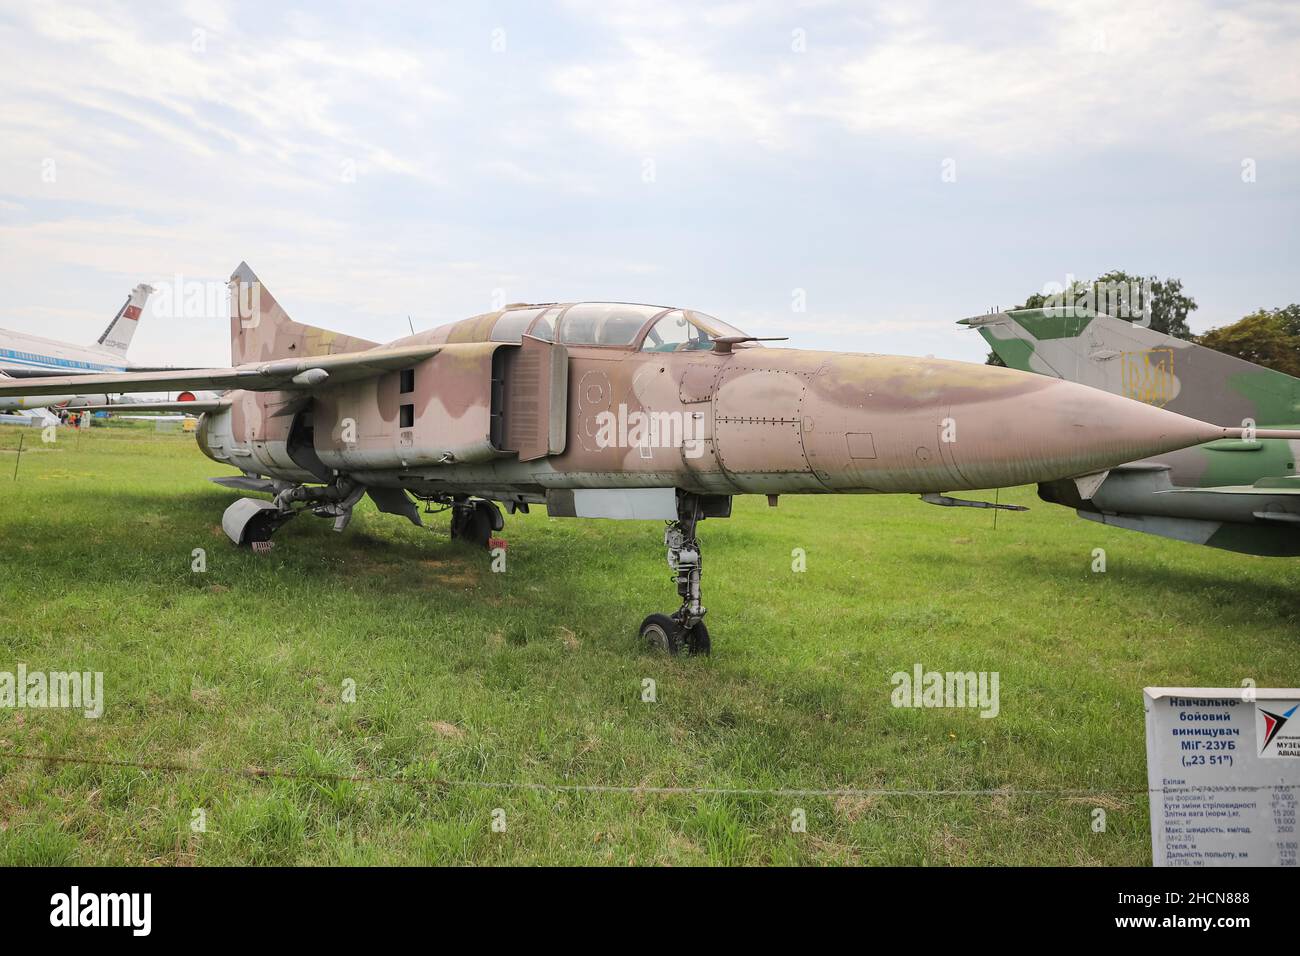 KIEV, UKRAINE - AUGUST 01, 2021: Ukrainian Air Force Mikoyan-Gurevich MiG-23U Flogger C displayed at Oleg Antonov State Aviation Museum Stock Photo